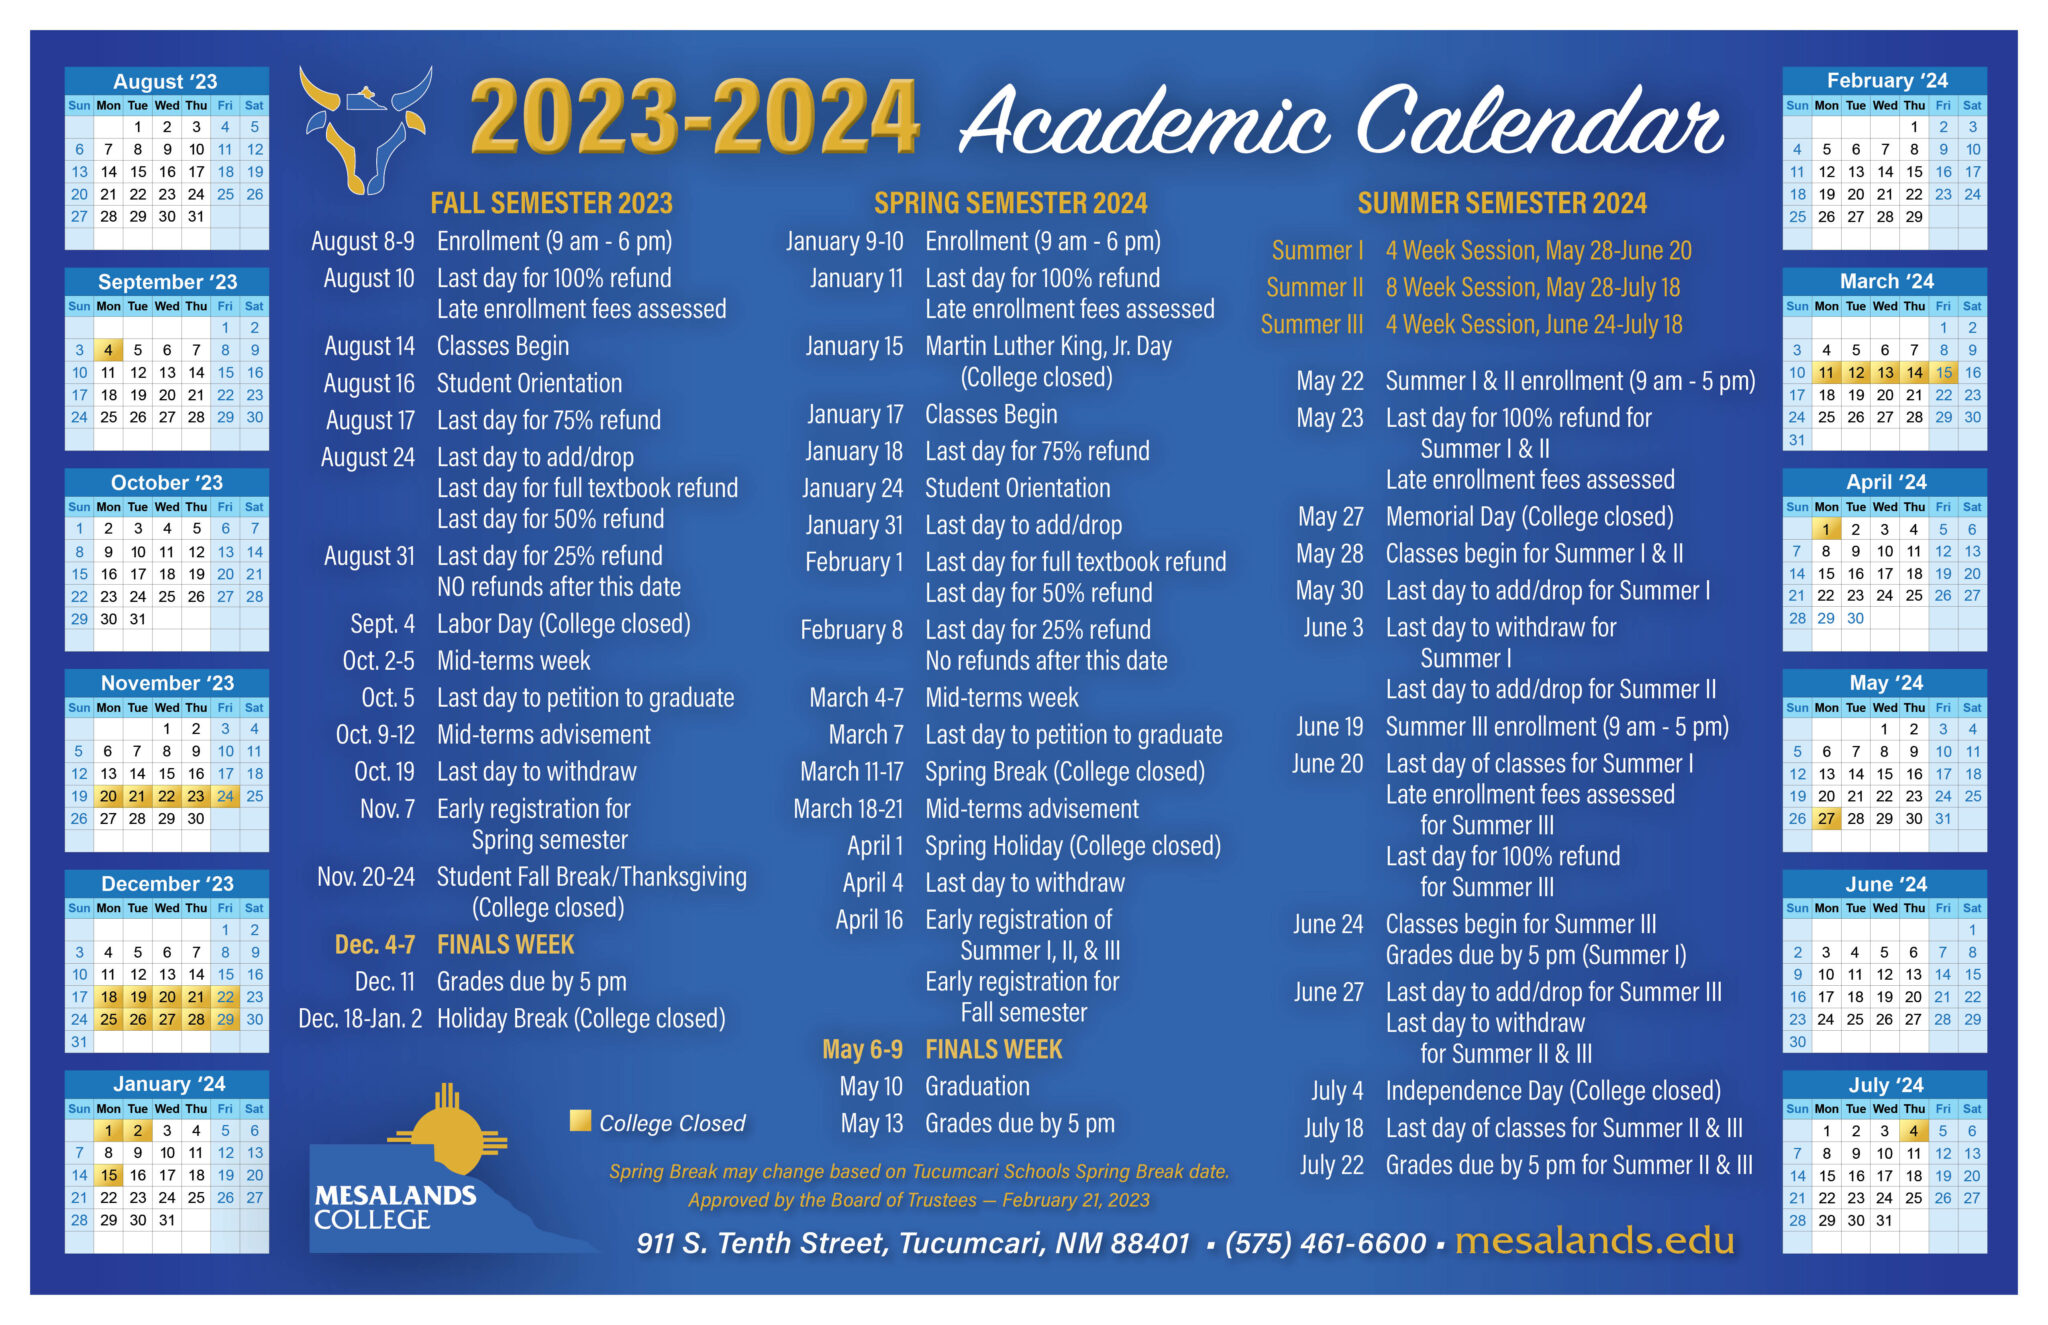 St Law U Academic Calendar